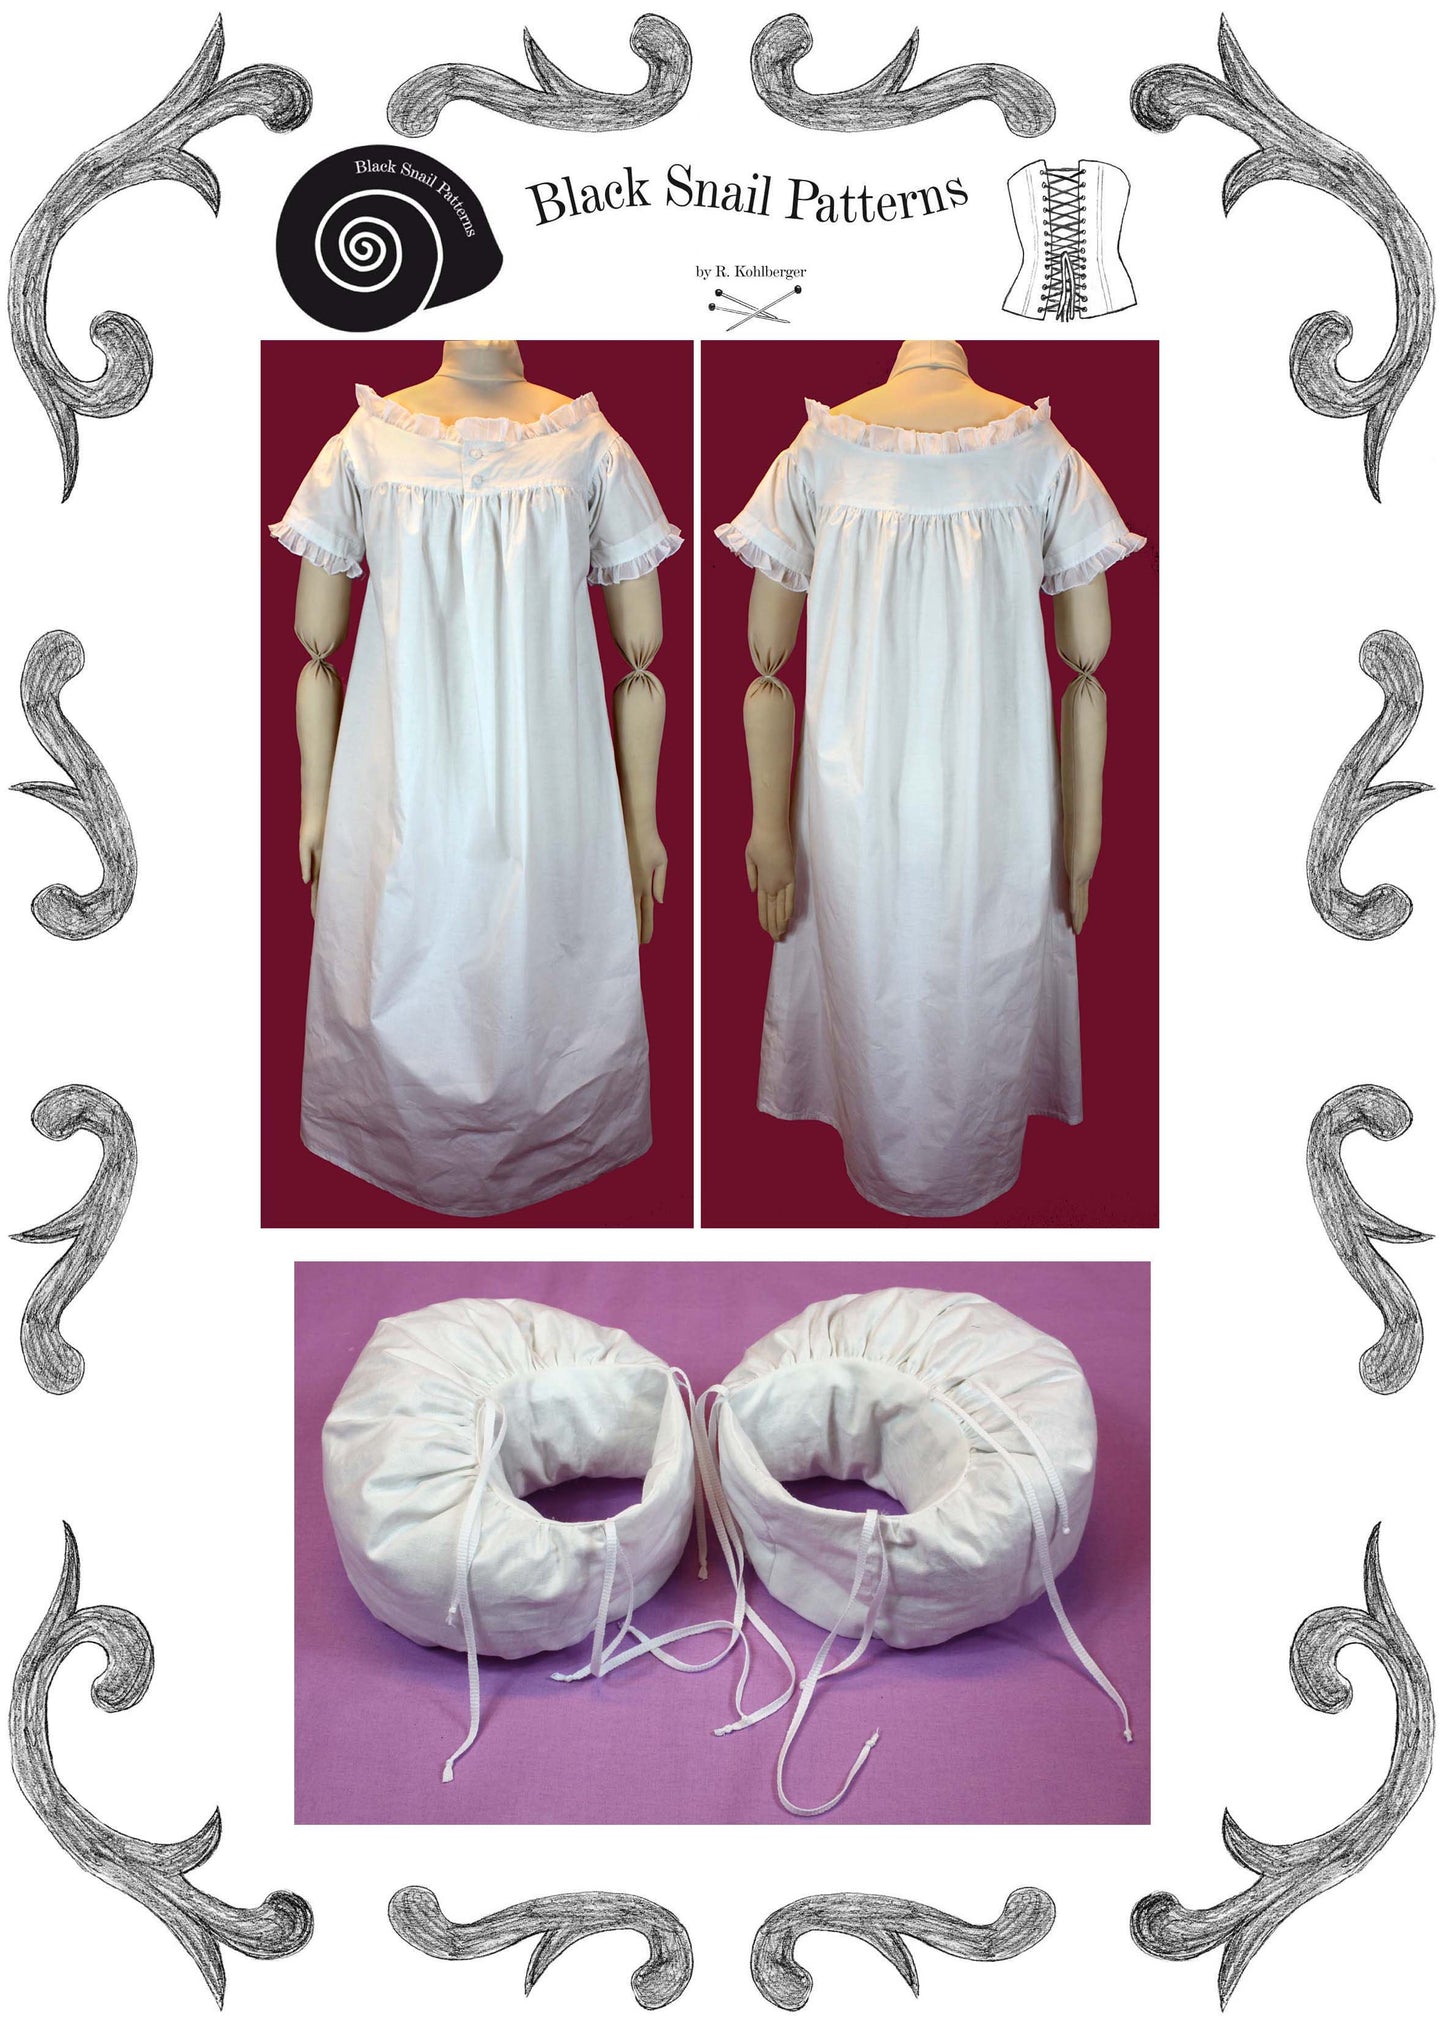 C-string Sewing Pattern Schnittmuster English German Exotic Dancewear  Burlesque Costume Size 4-16 Größe 34-46 Plus Size 